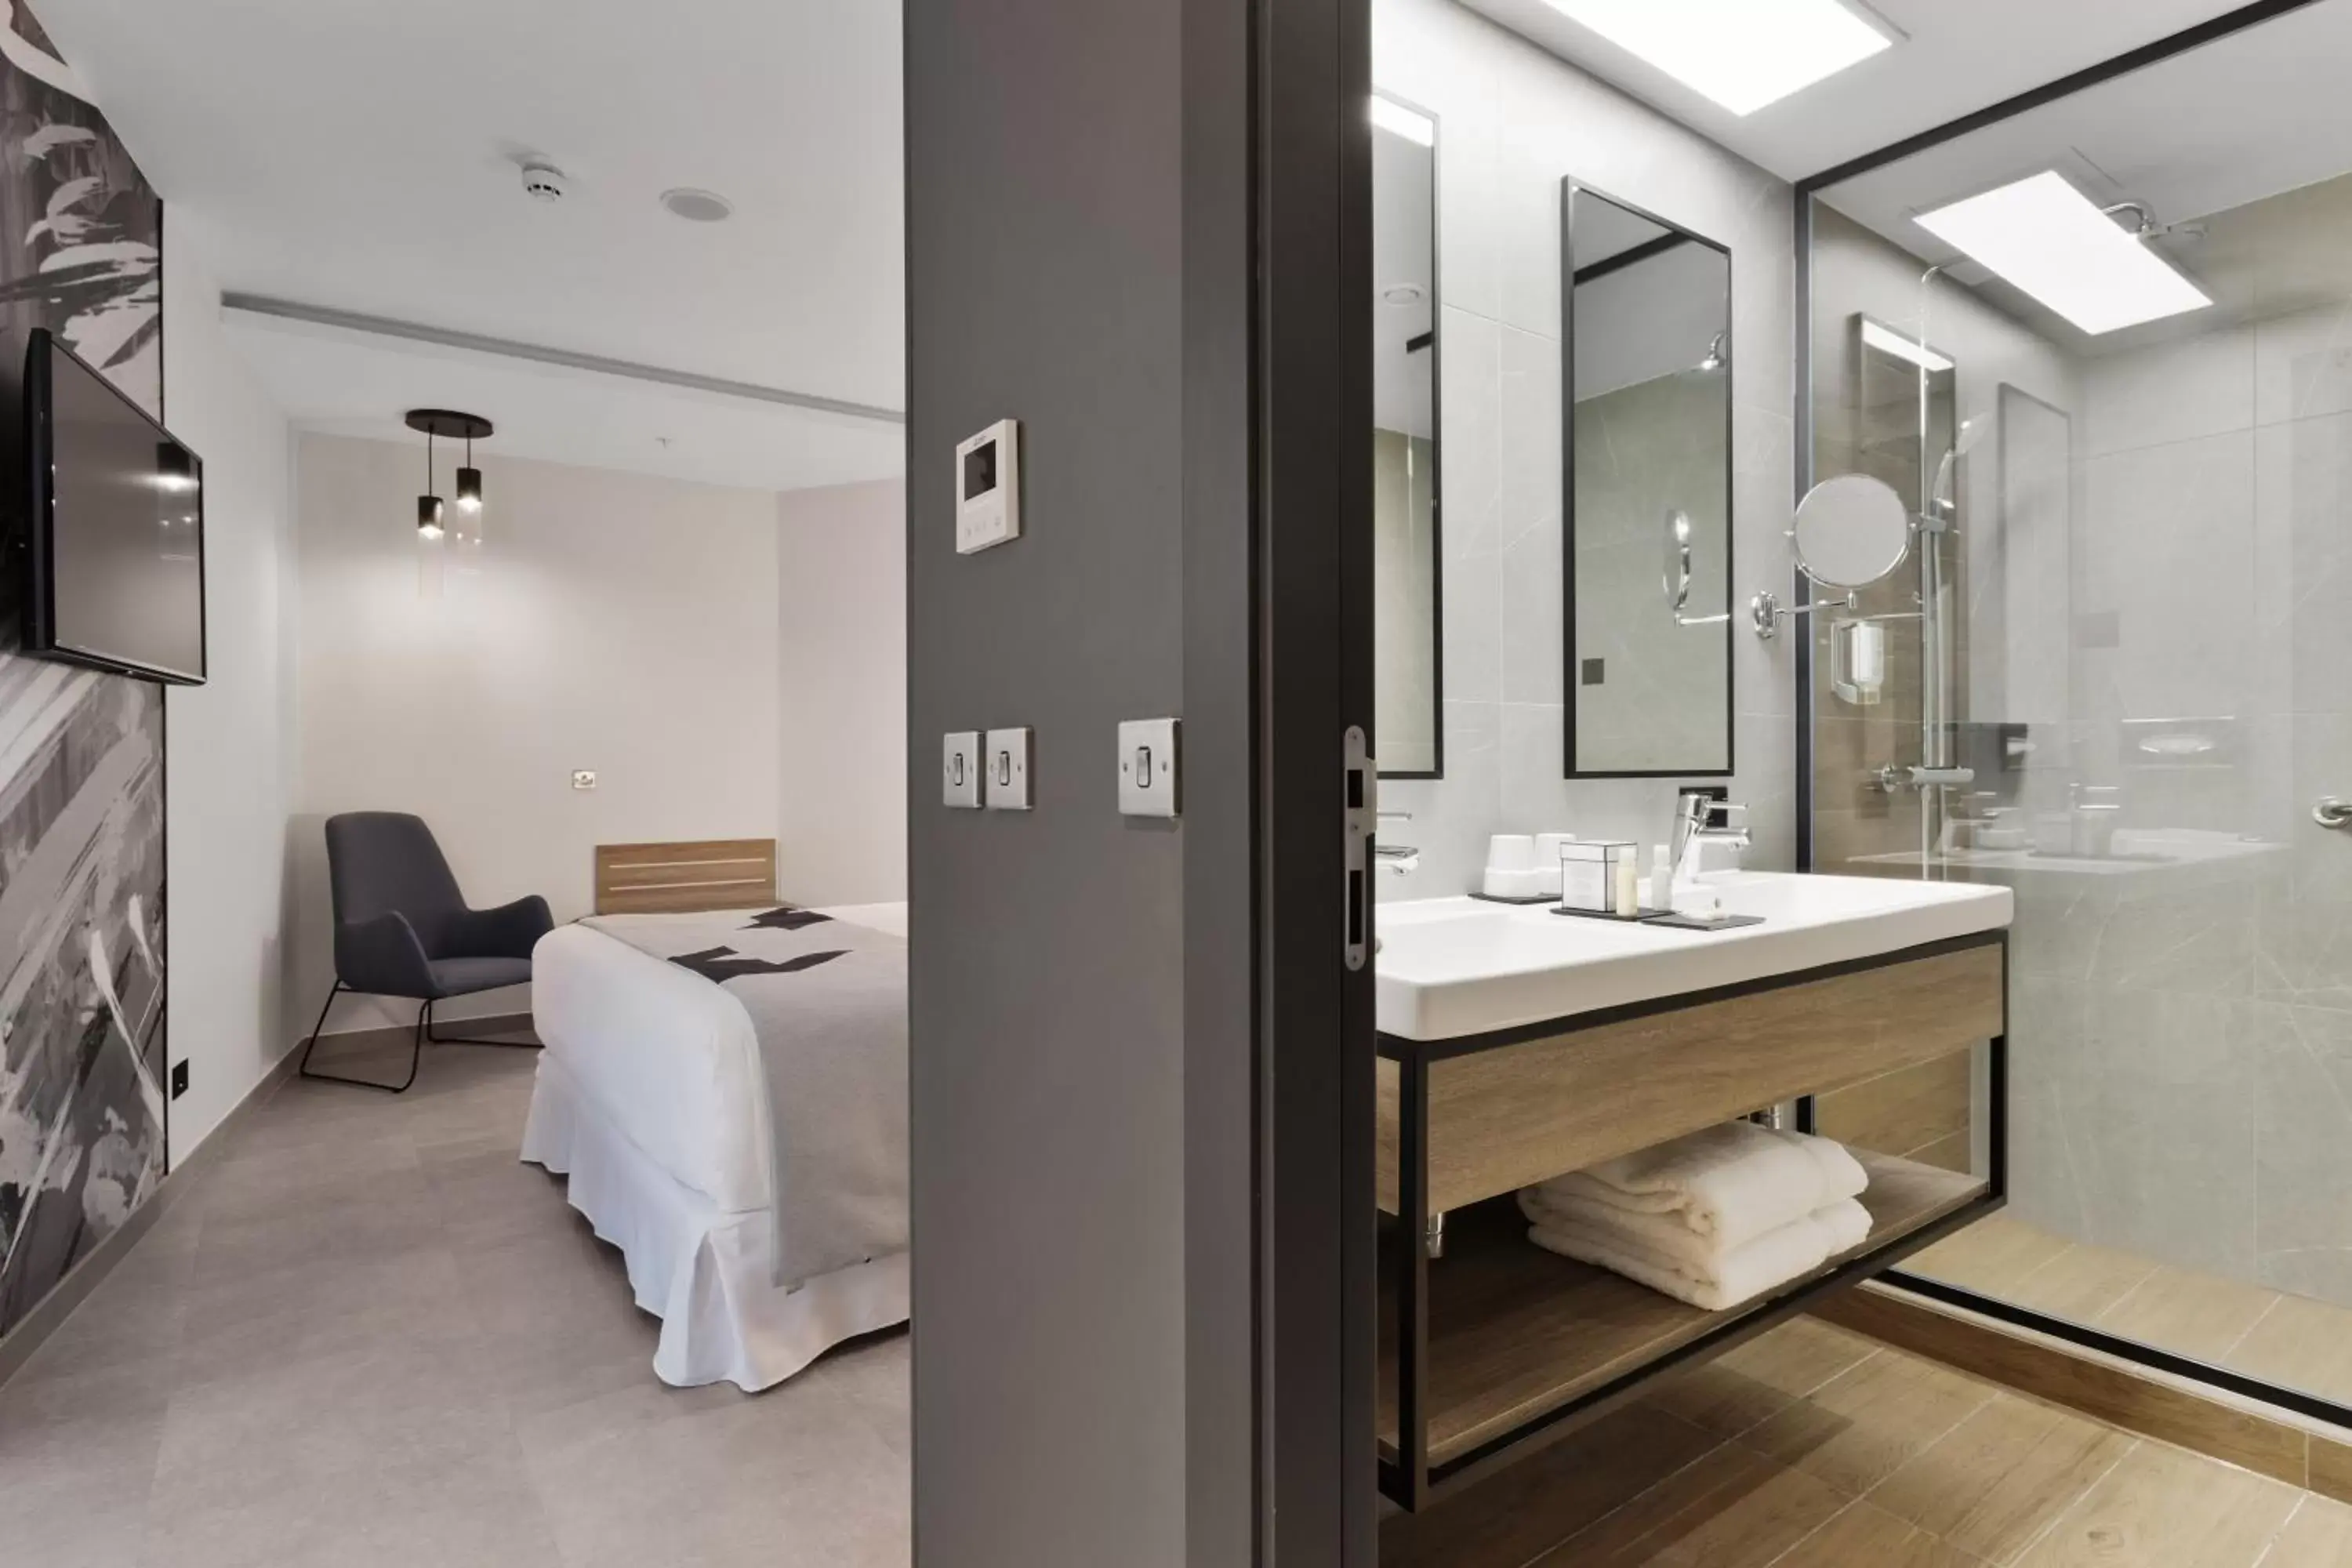 Photo of the whole room, Bathroom in Riu Plaza London Victoria